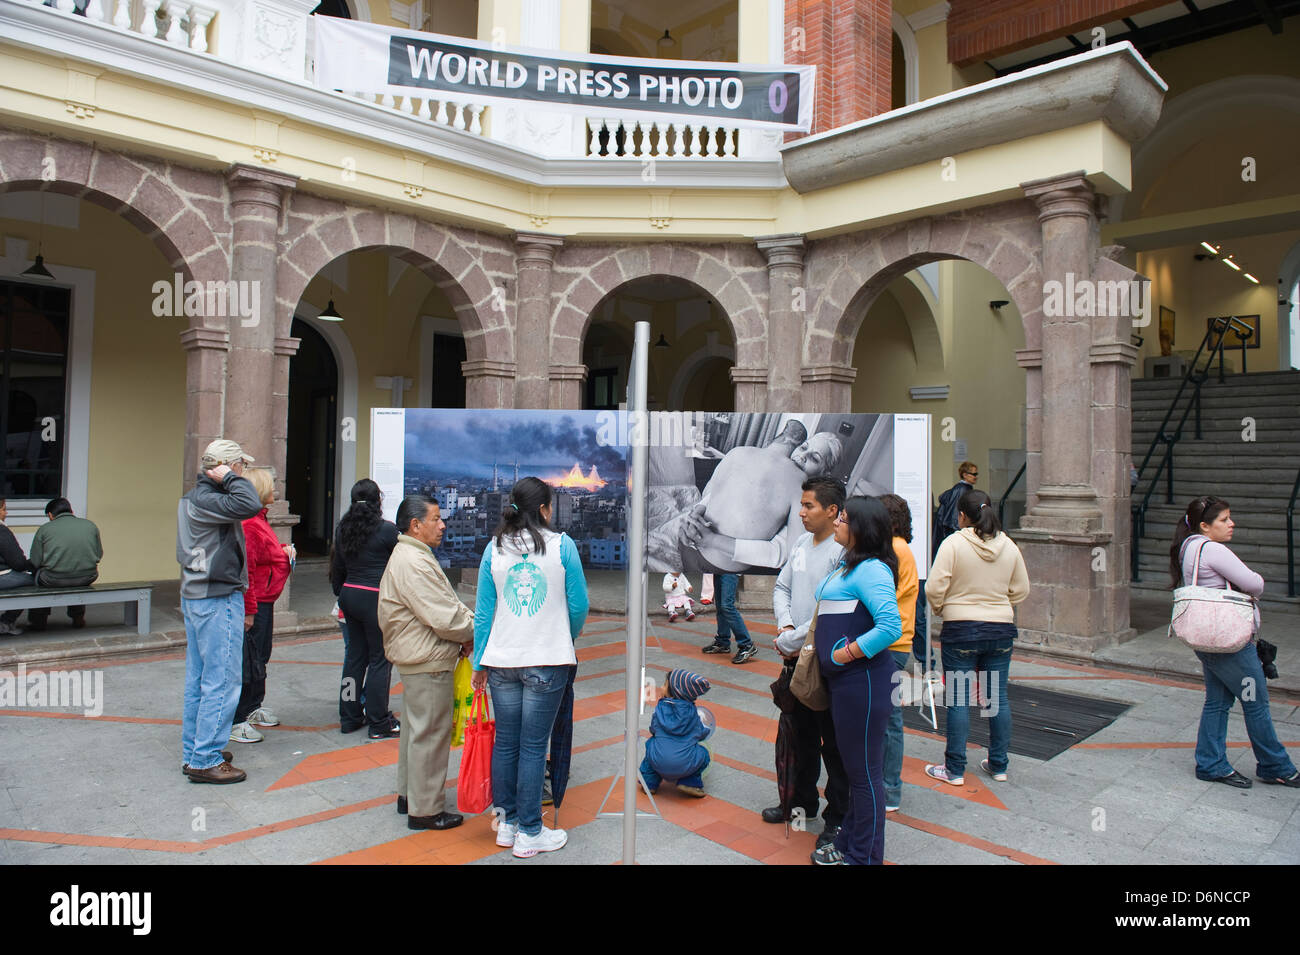 World Press photography exhibition, old town, Unesco World Heritage site, Quito, Ecuador, South America Stock Photo